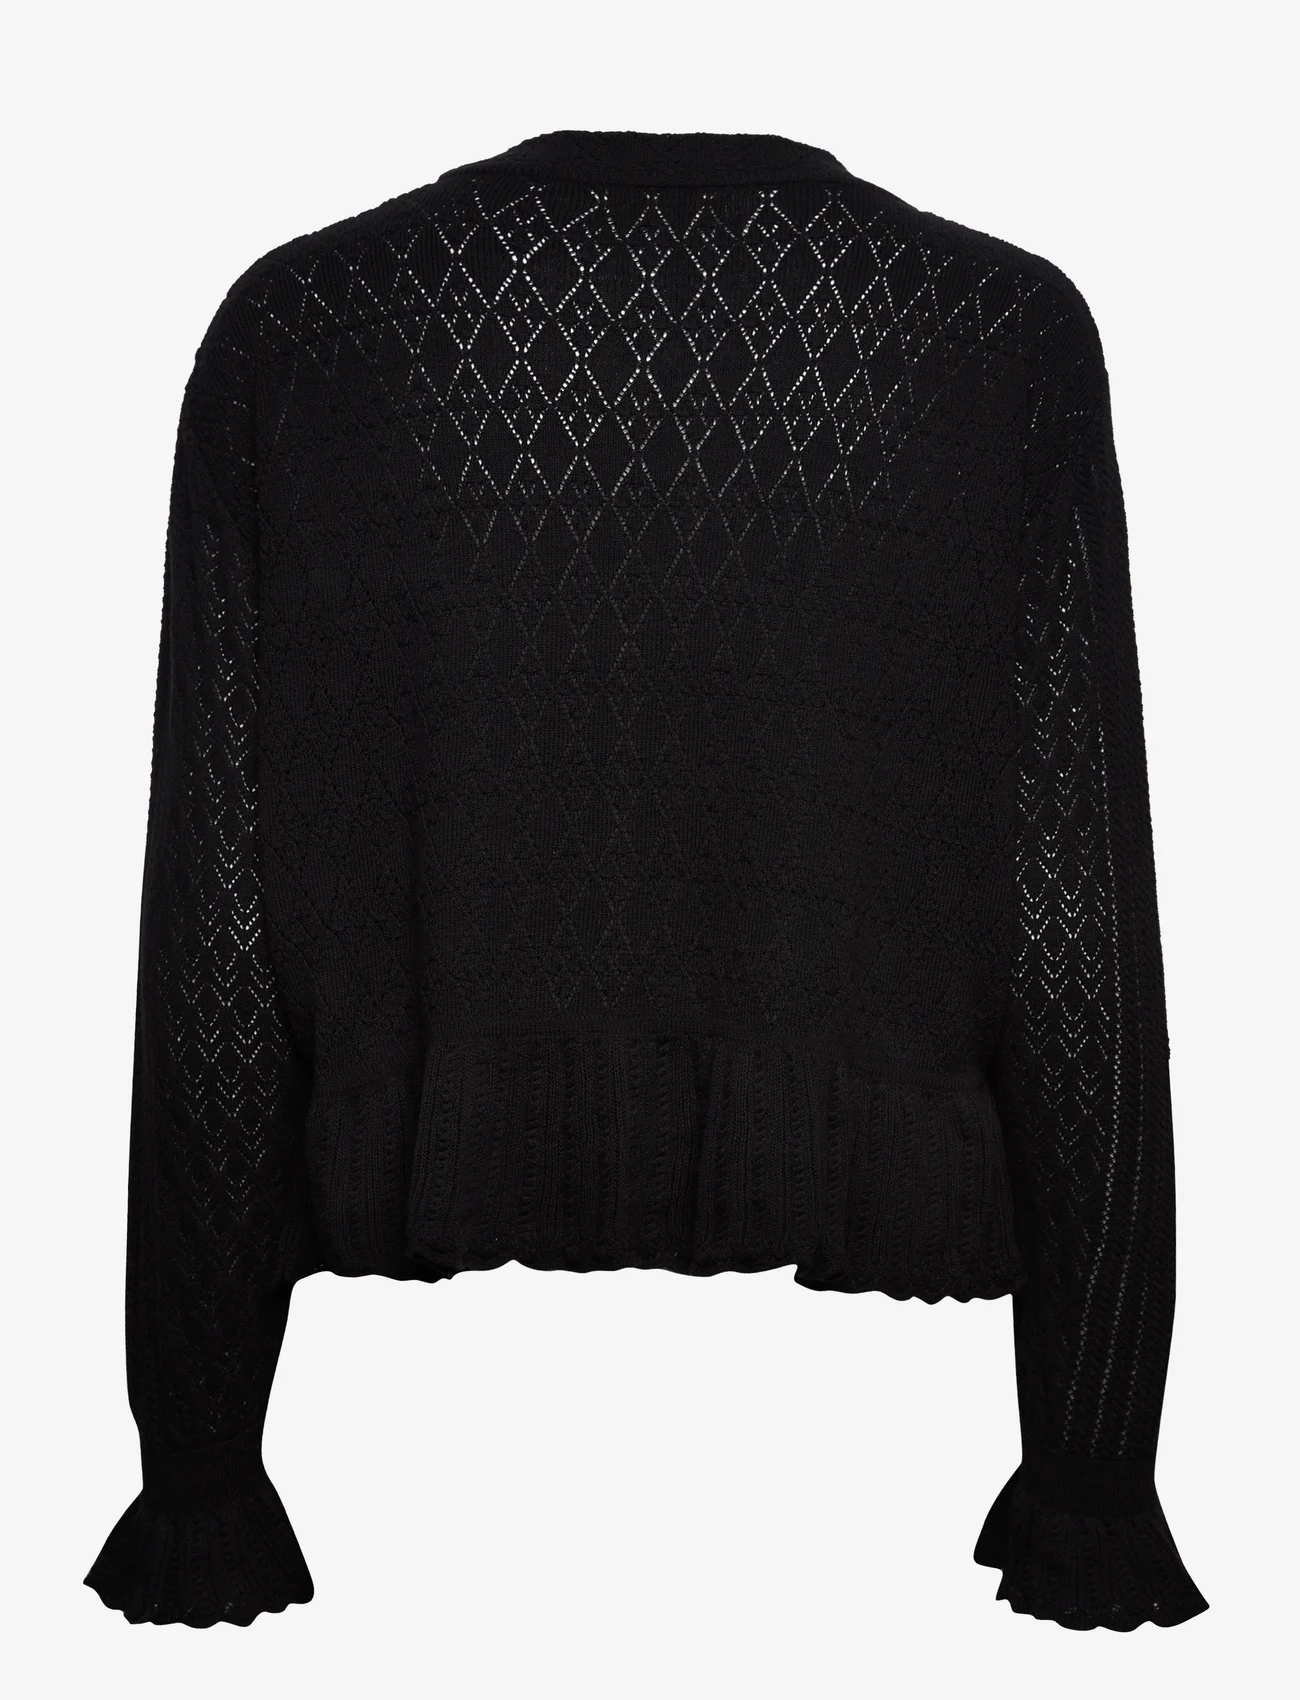 ODD MOLLY - Eden High Neck Sweater - gensere - almost black - 1